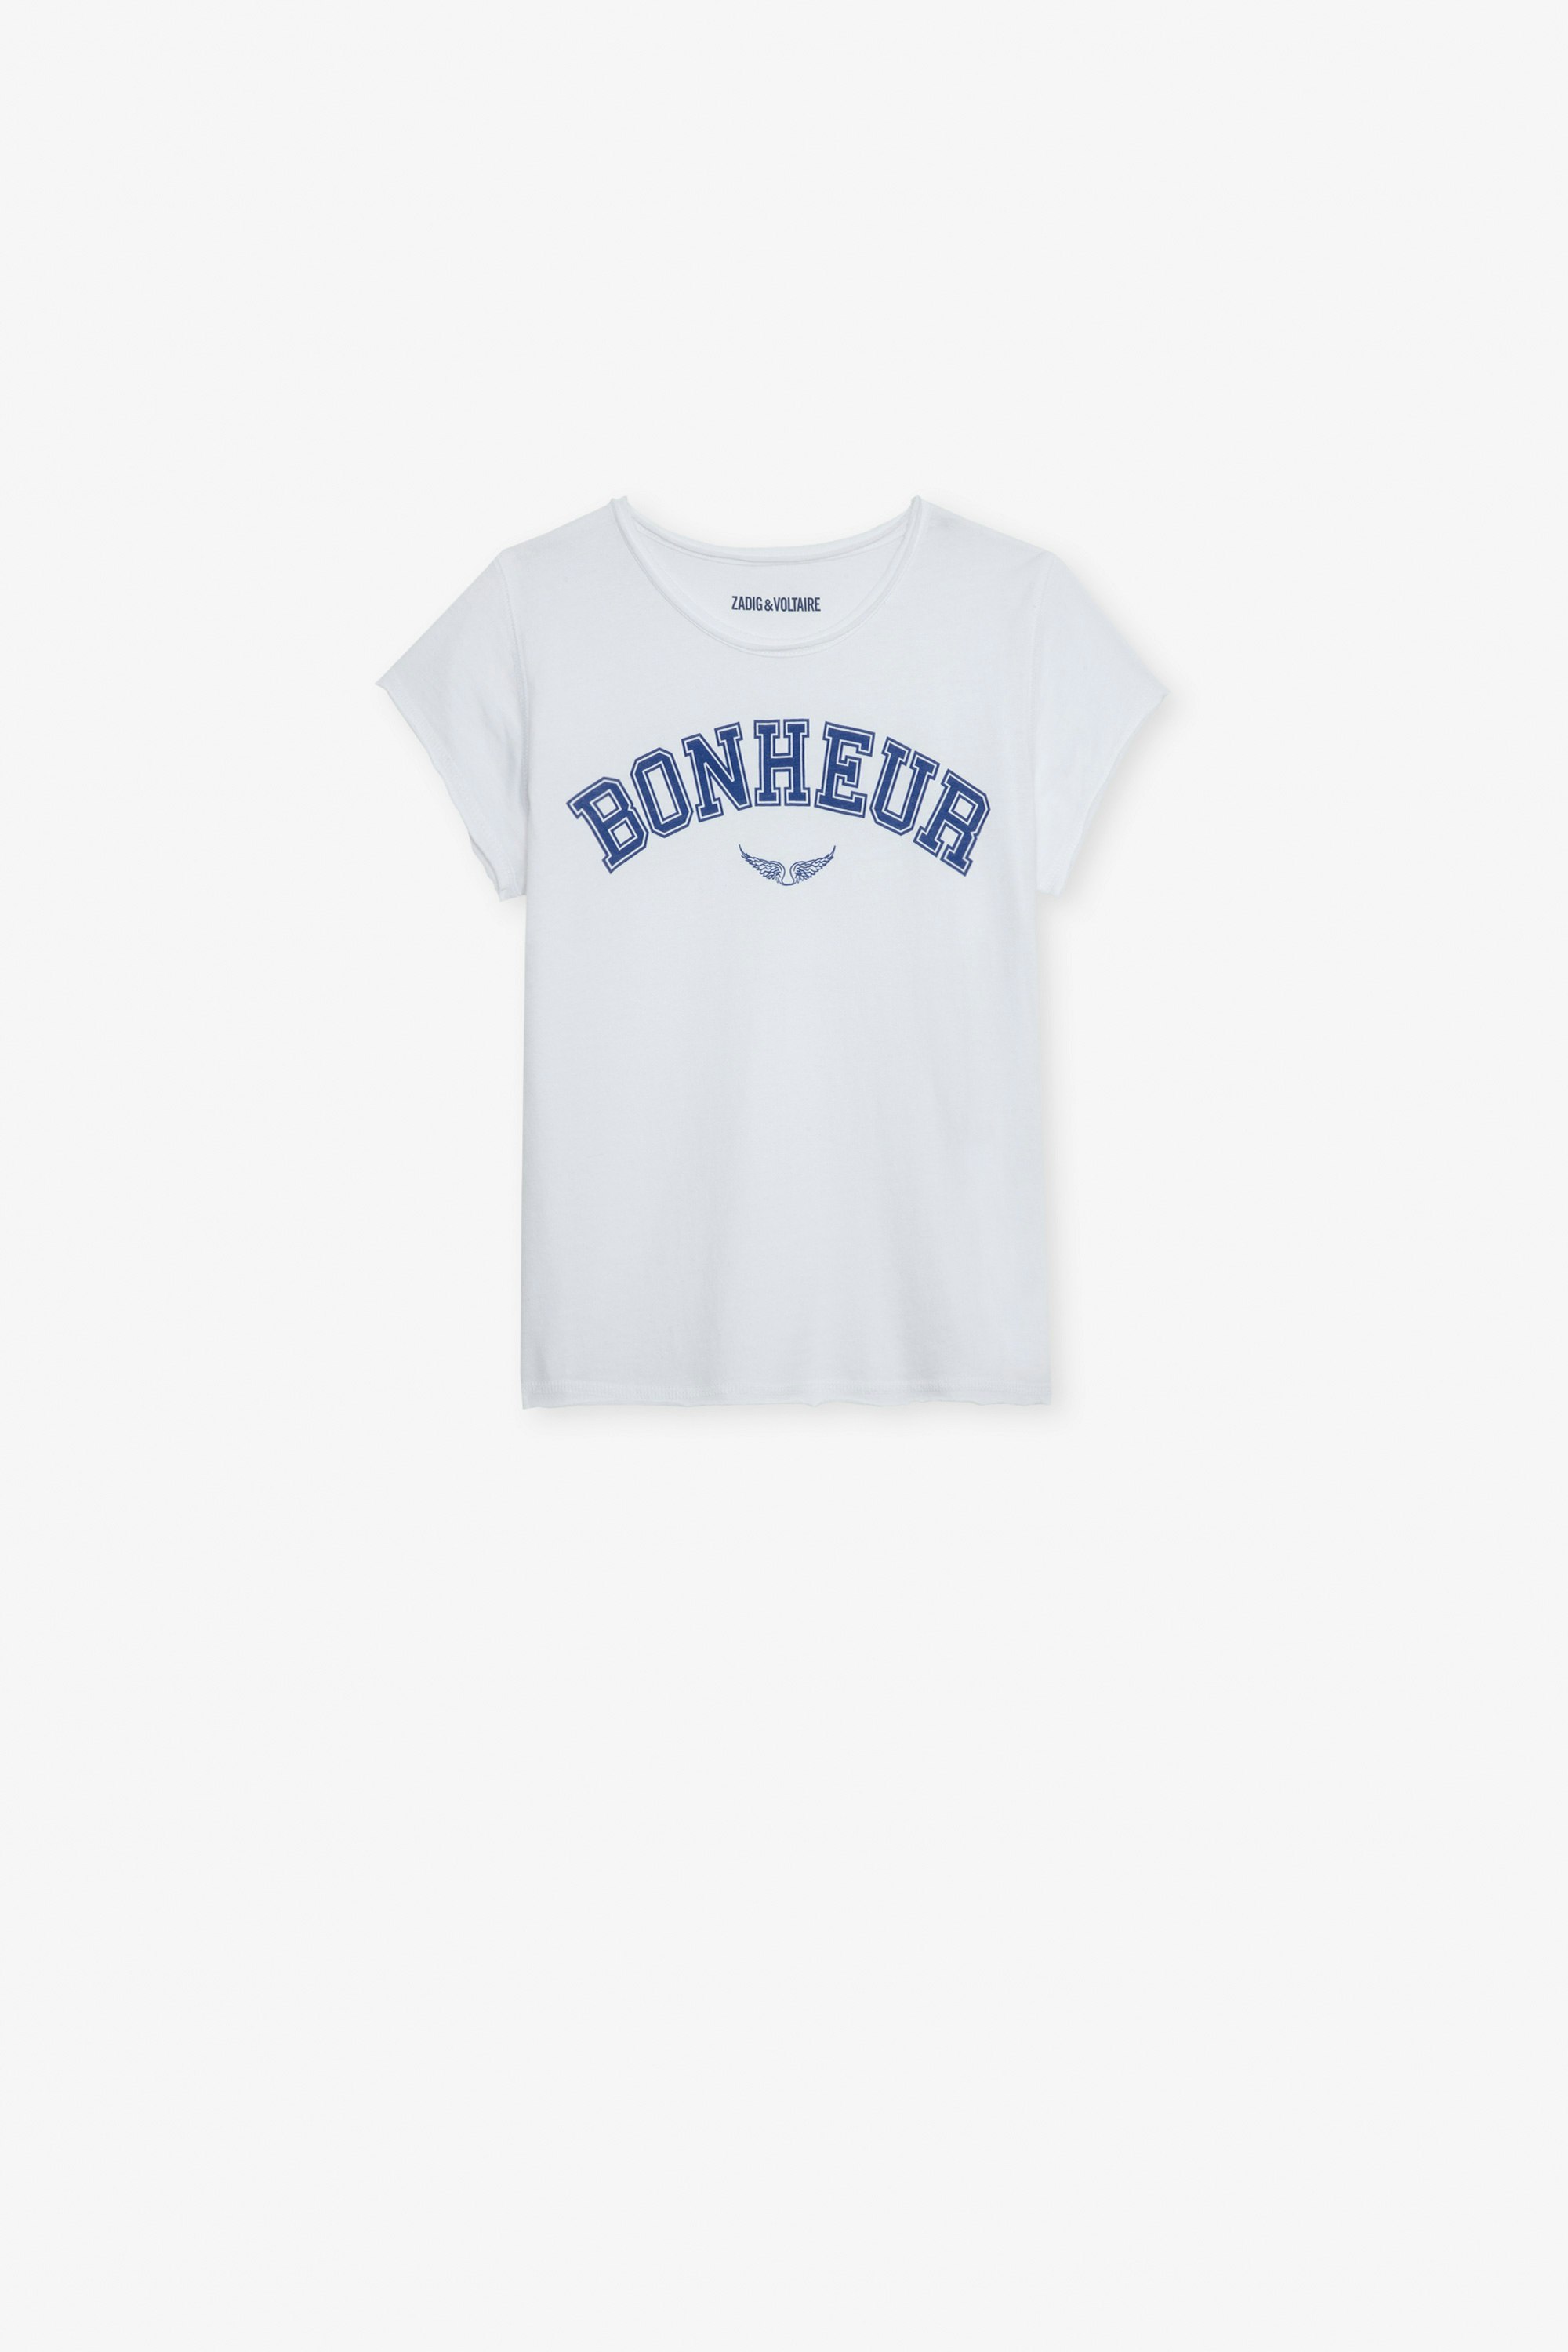 Amber Girls’ T-Shirt - Girls’ white cotton jersey short-sleeved T-shirt with “Bonheur” slogan.